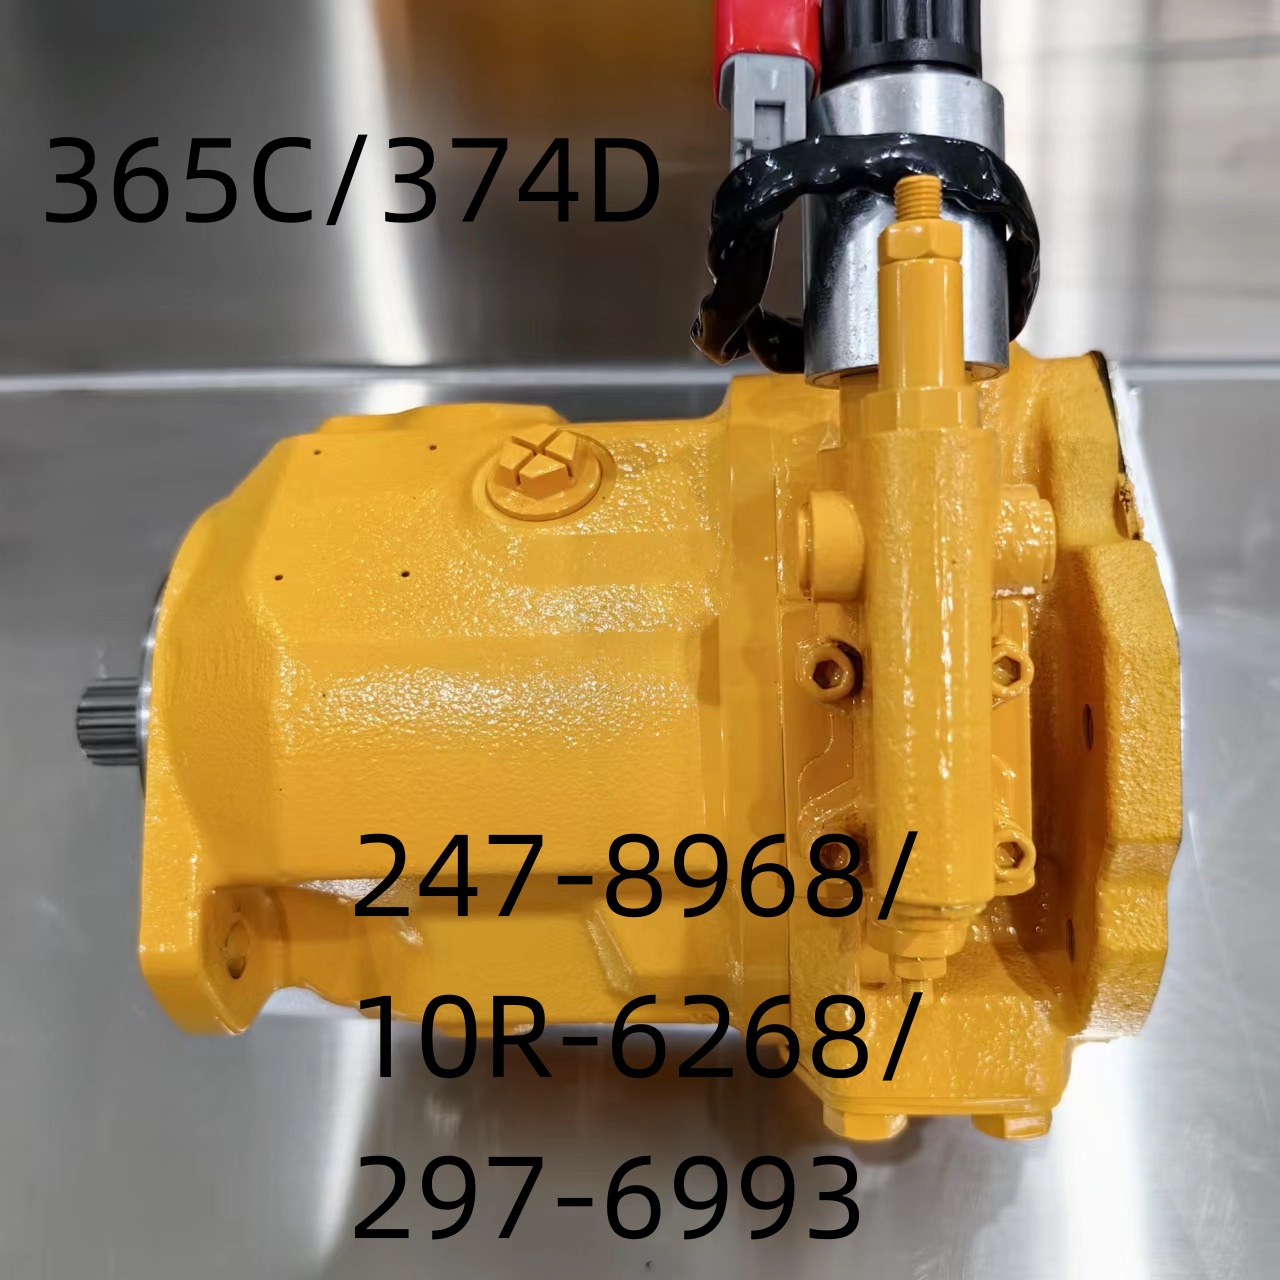 CAT 365C/374D挖掘机液压泵风扇泵247-8968 10R-6268 297-6993